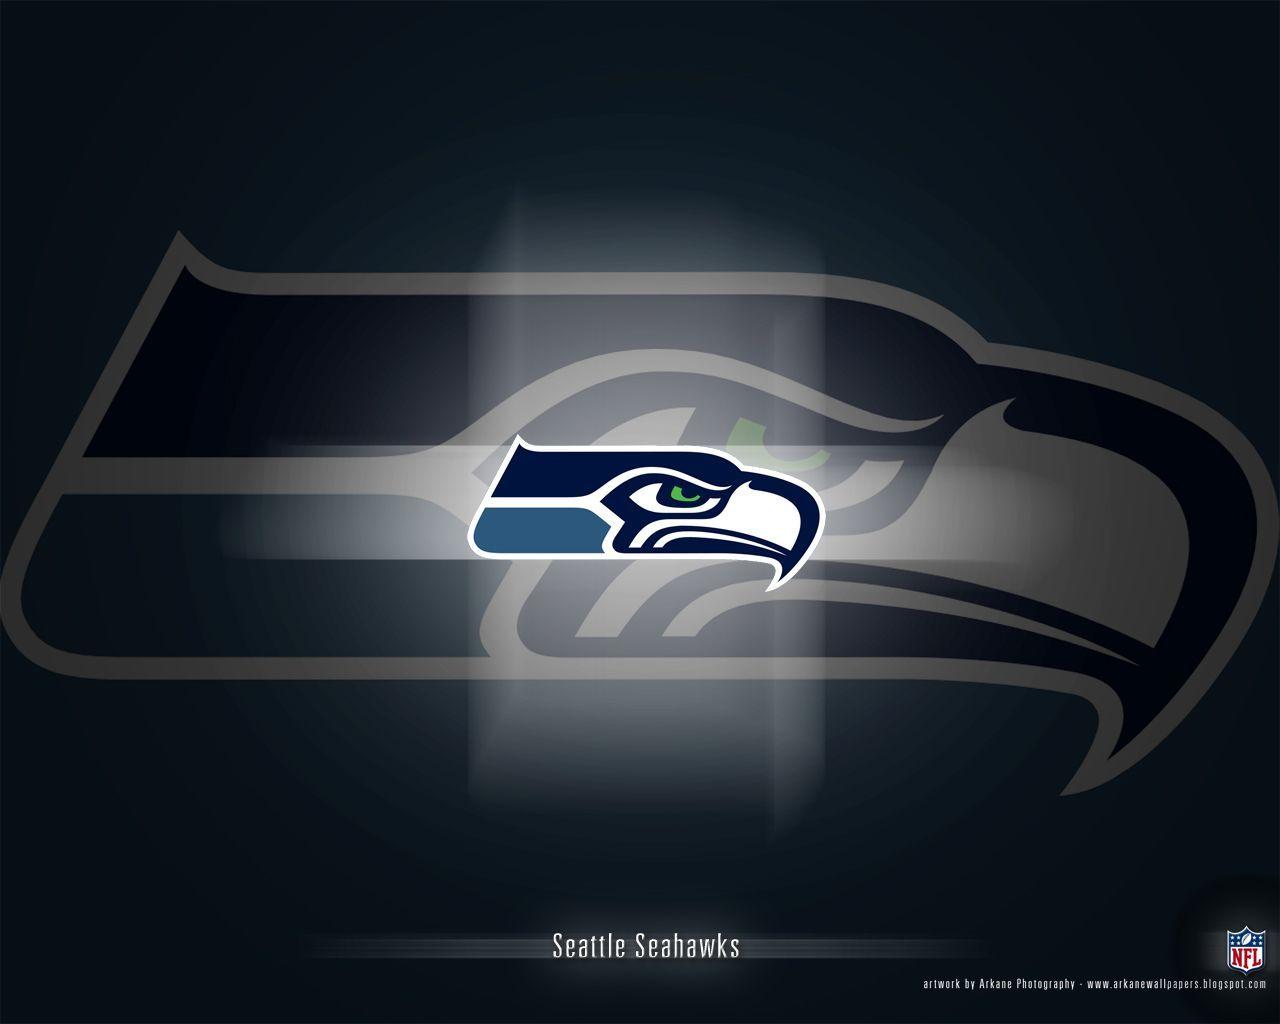 Seattle Seahawks Wallpaper Picture 26511 Image. wallgraf